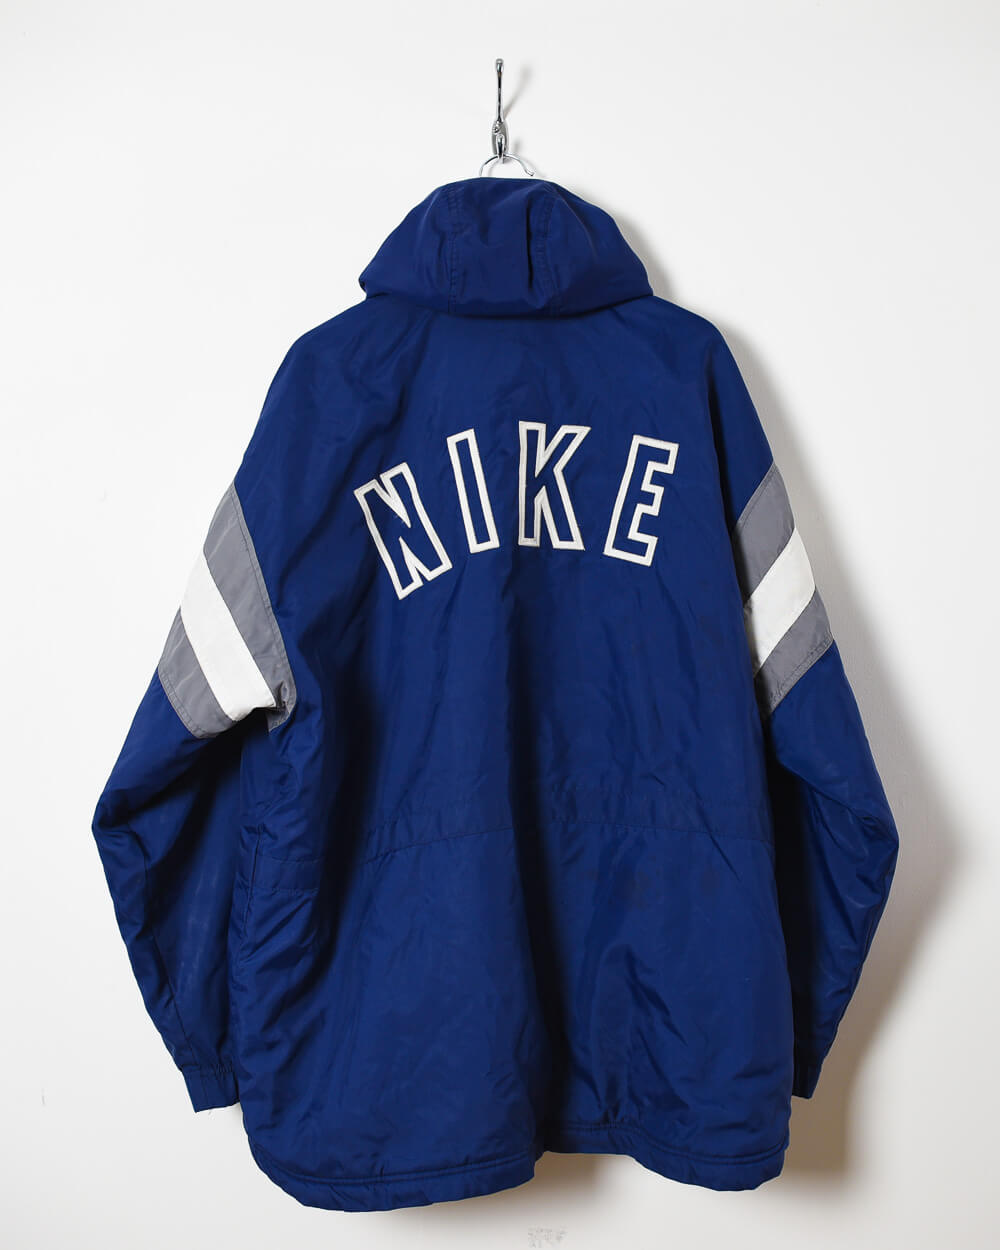 Navy Nike Hooded Winter Coat -  X-Large